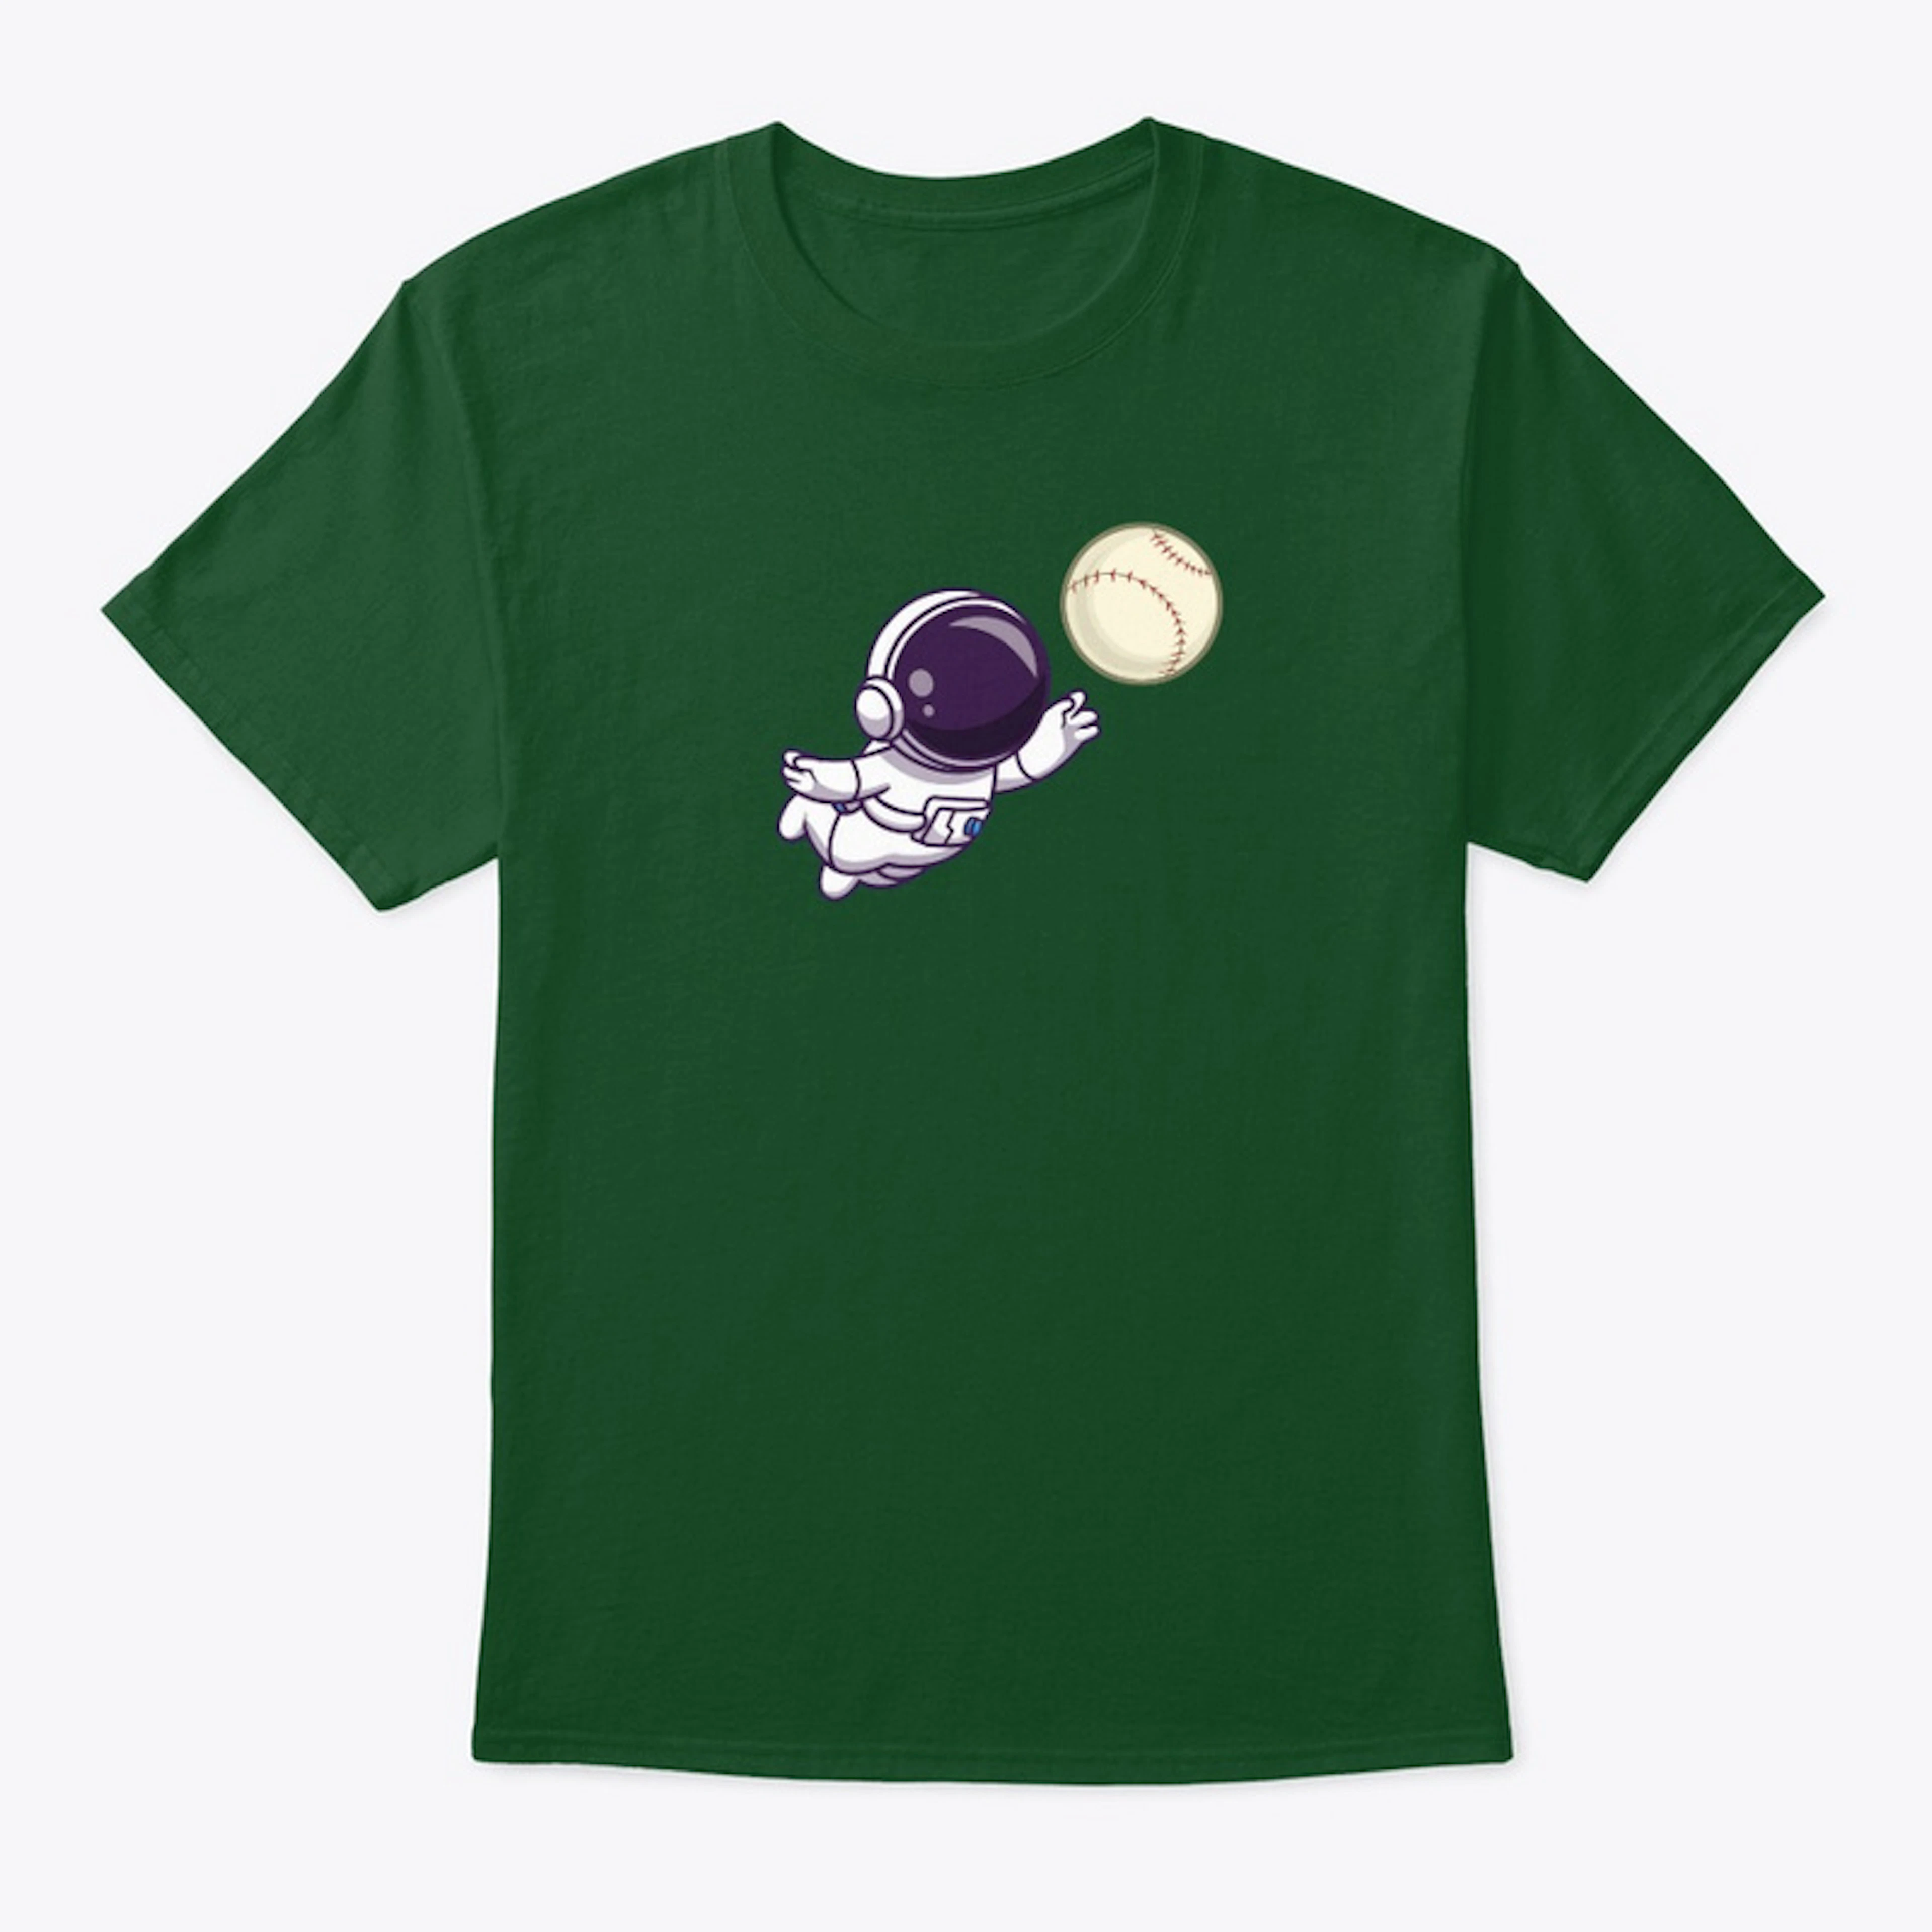 Moonshooter baseball gear